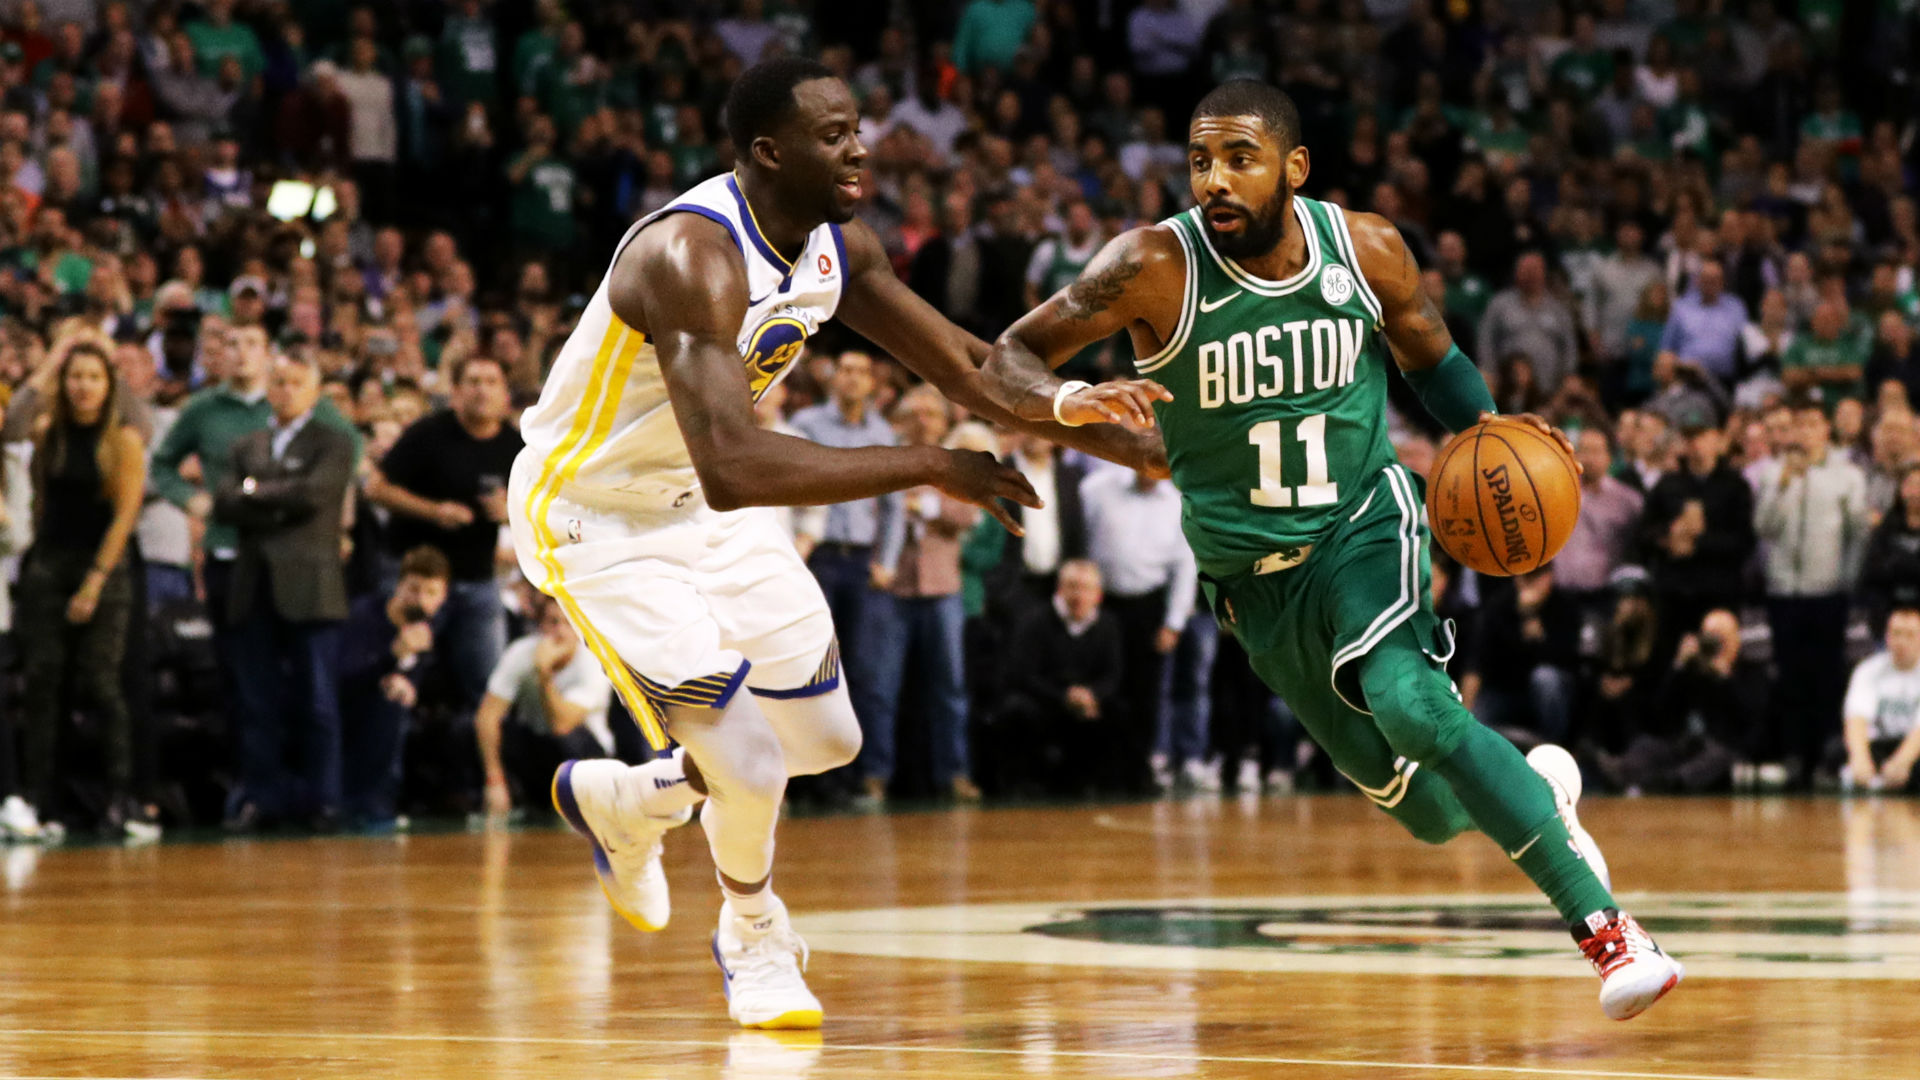 Warriors vs. Celtics: Score, results, highlights from Boston's comeback win | NBA ...